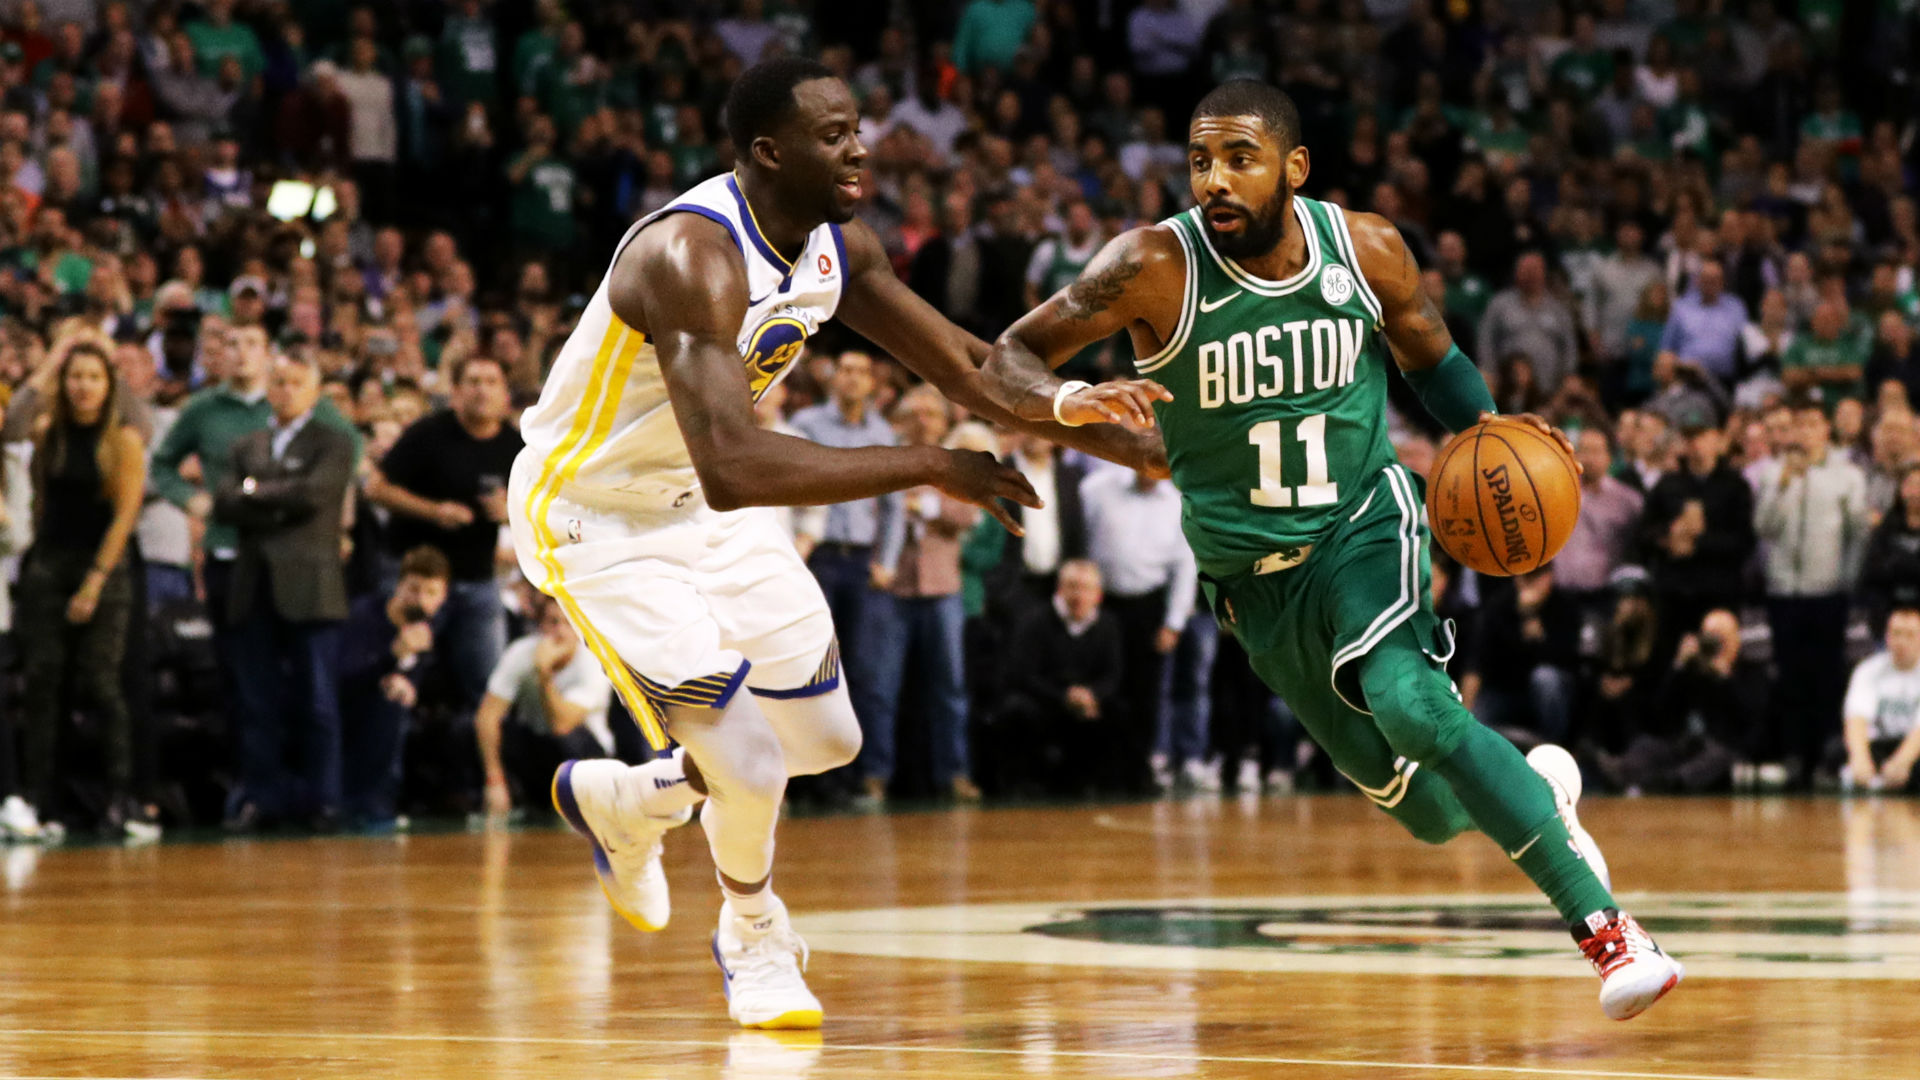 Warriors vs. Celtics: Score, results, highlights from Boston's comeback win | NBA ...